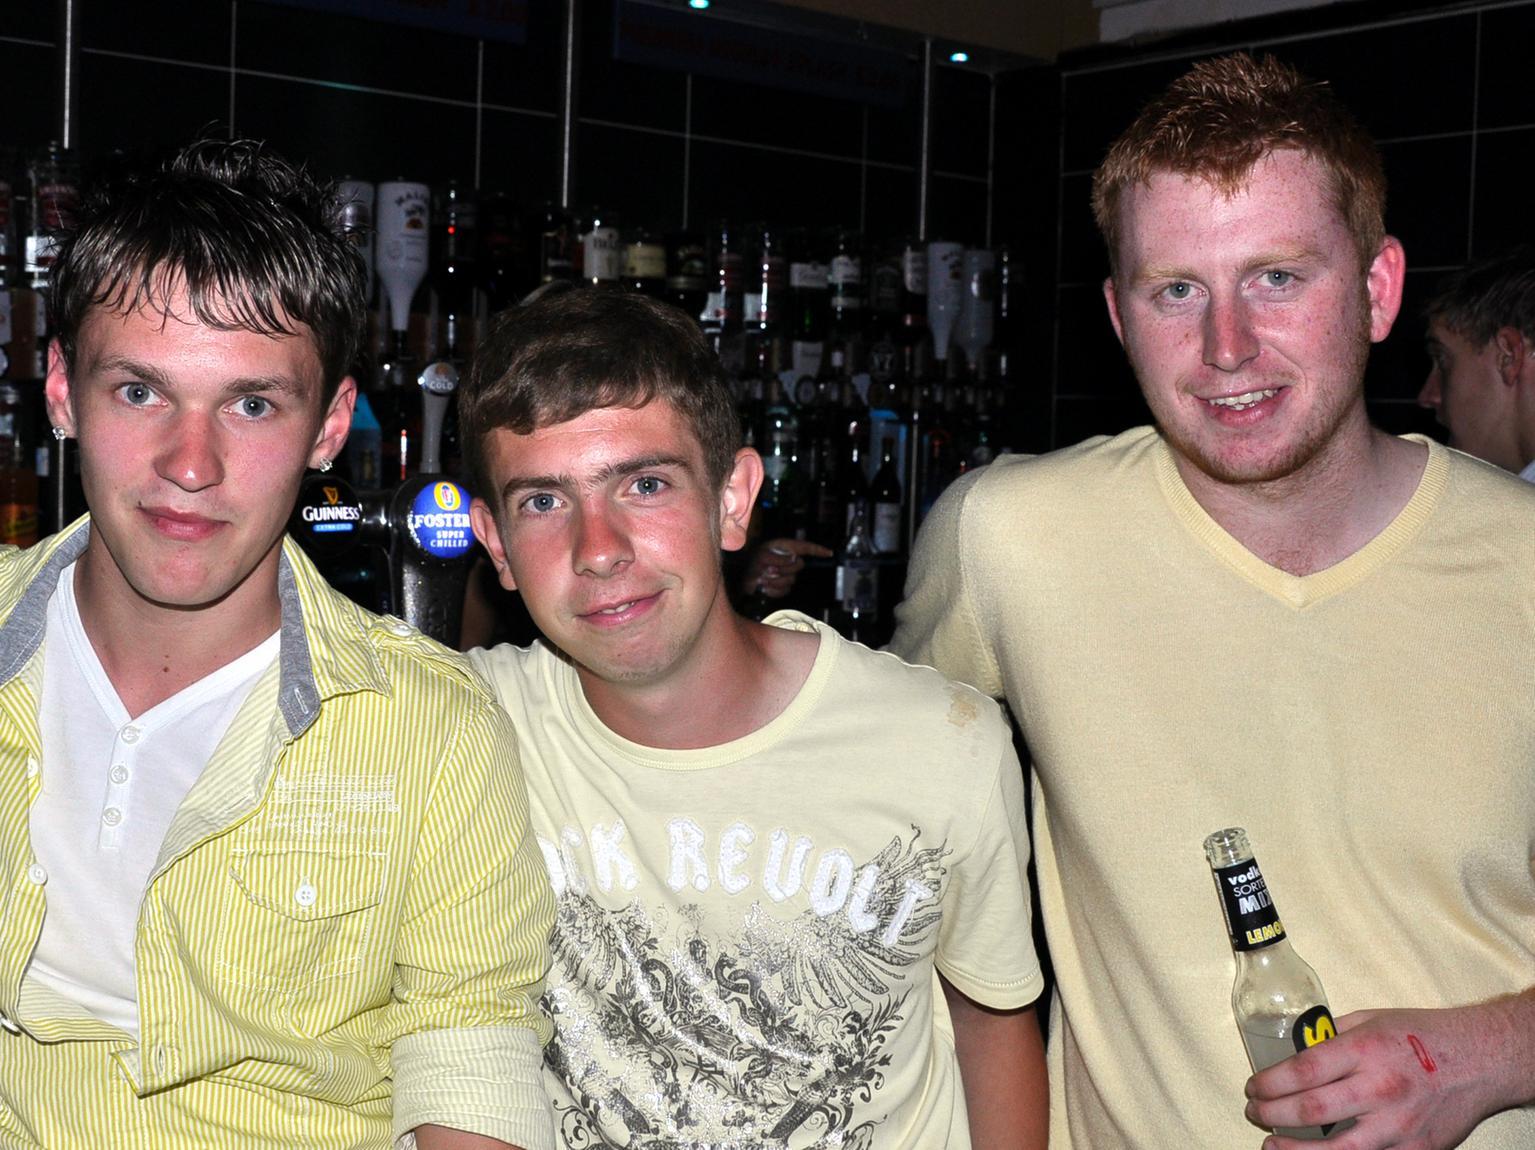 Simon, Danny and Tim in Quids Inn.